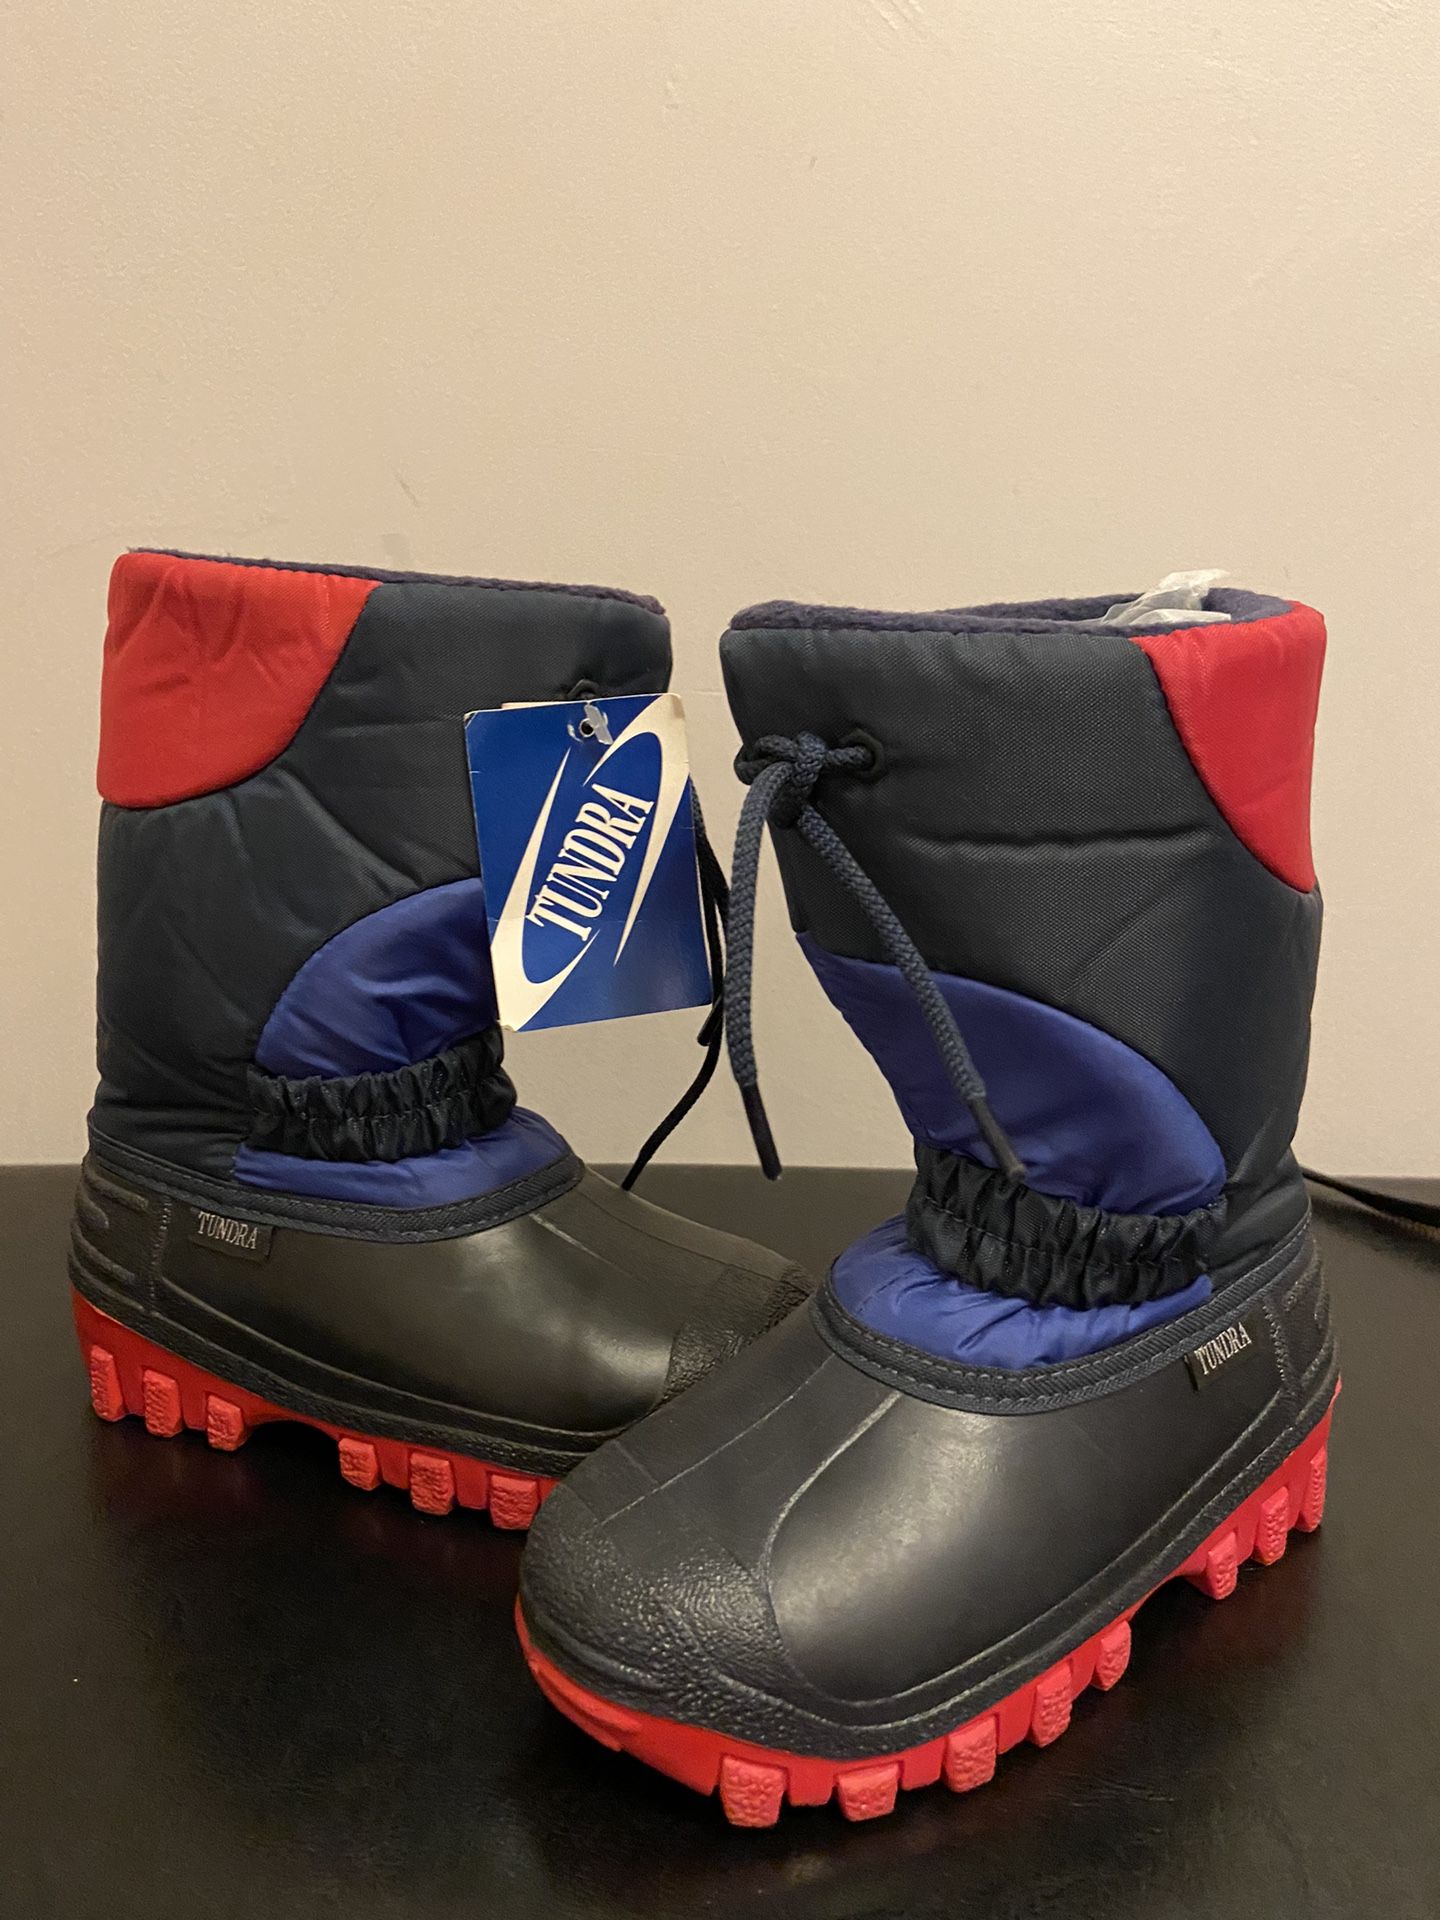 New Kid’s Waterproof -Snow Boots!